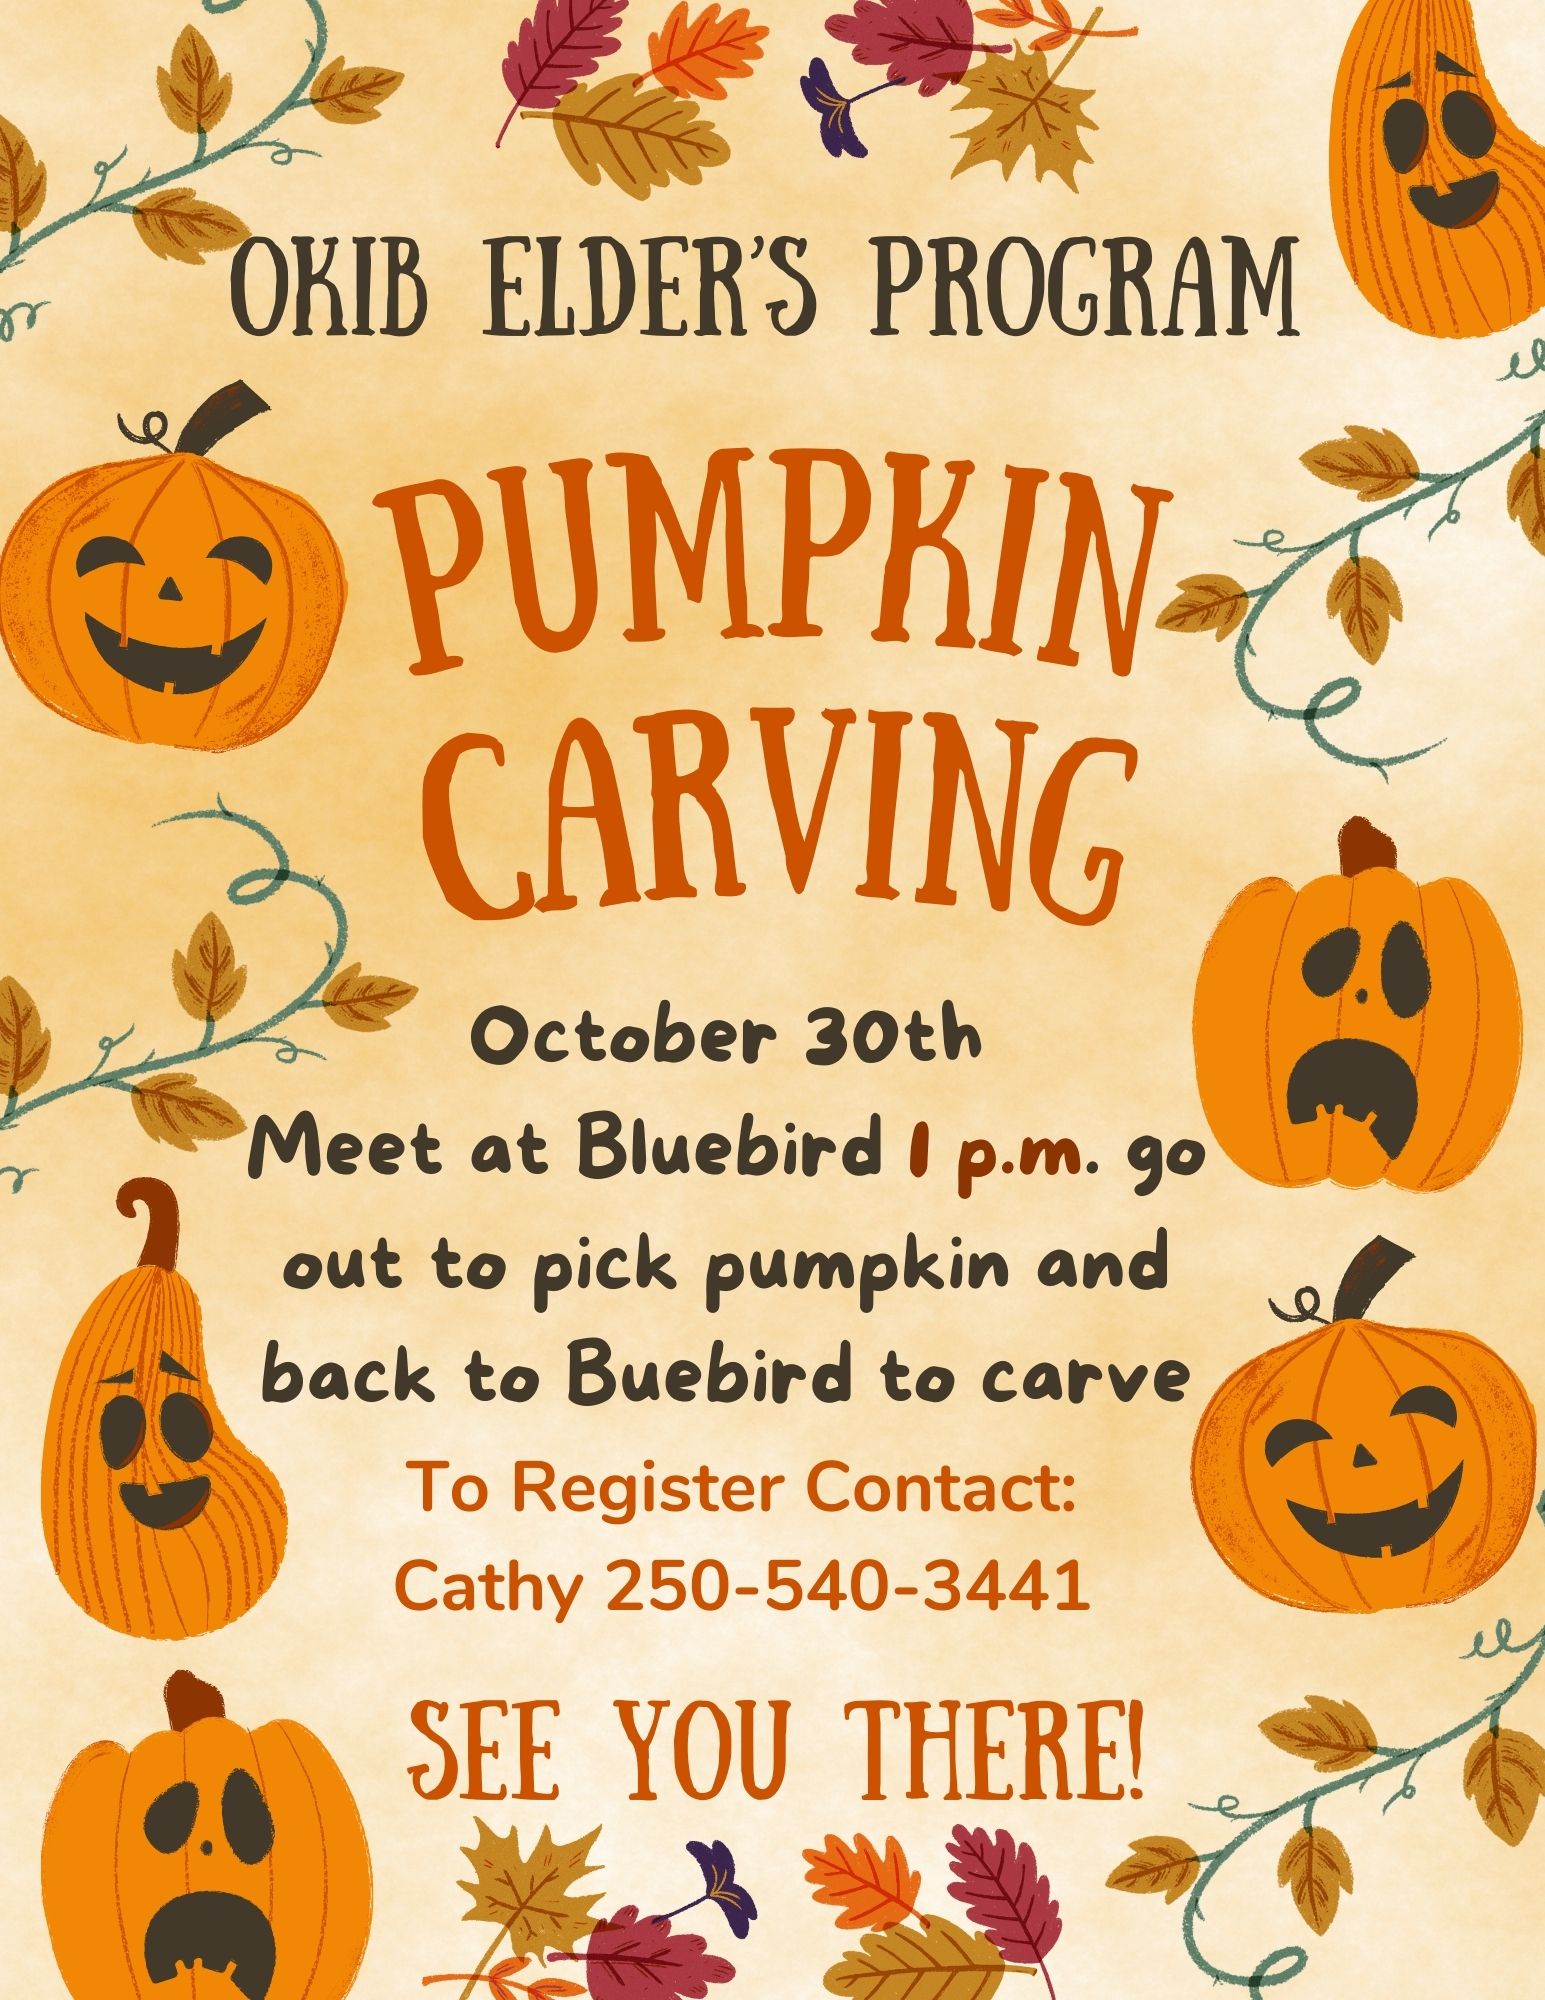 Elder’s Program – Pumpkin Carving